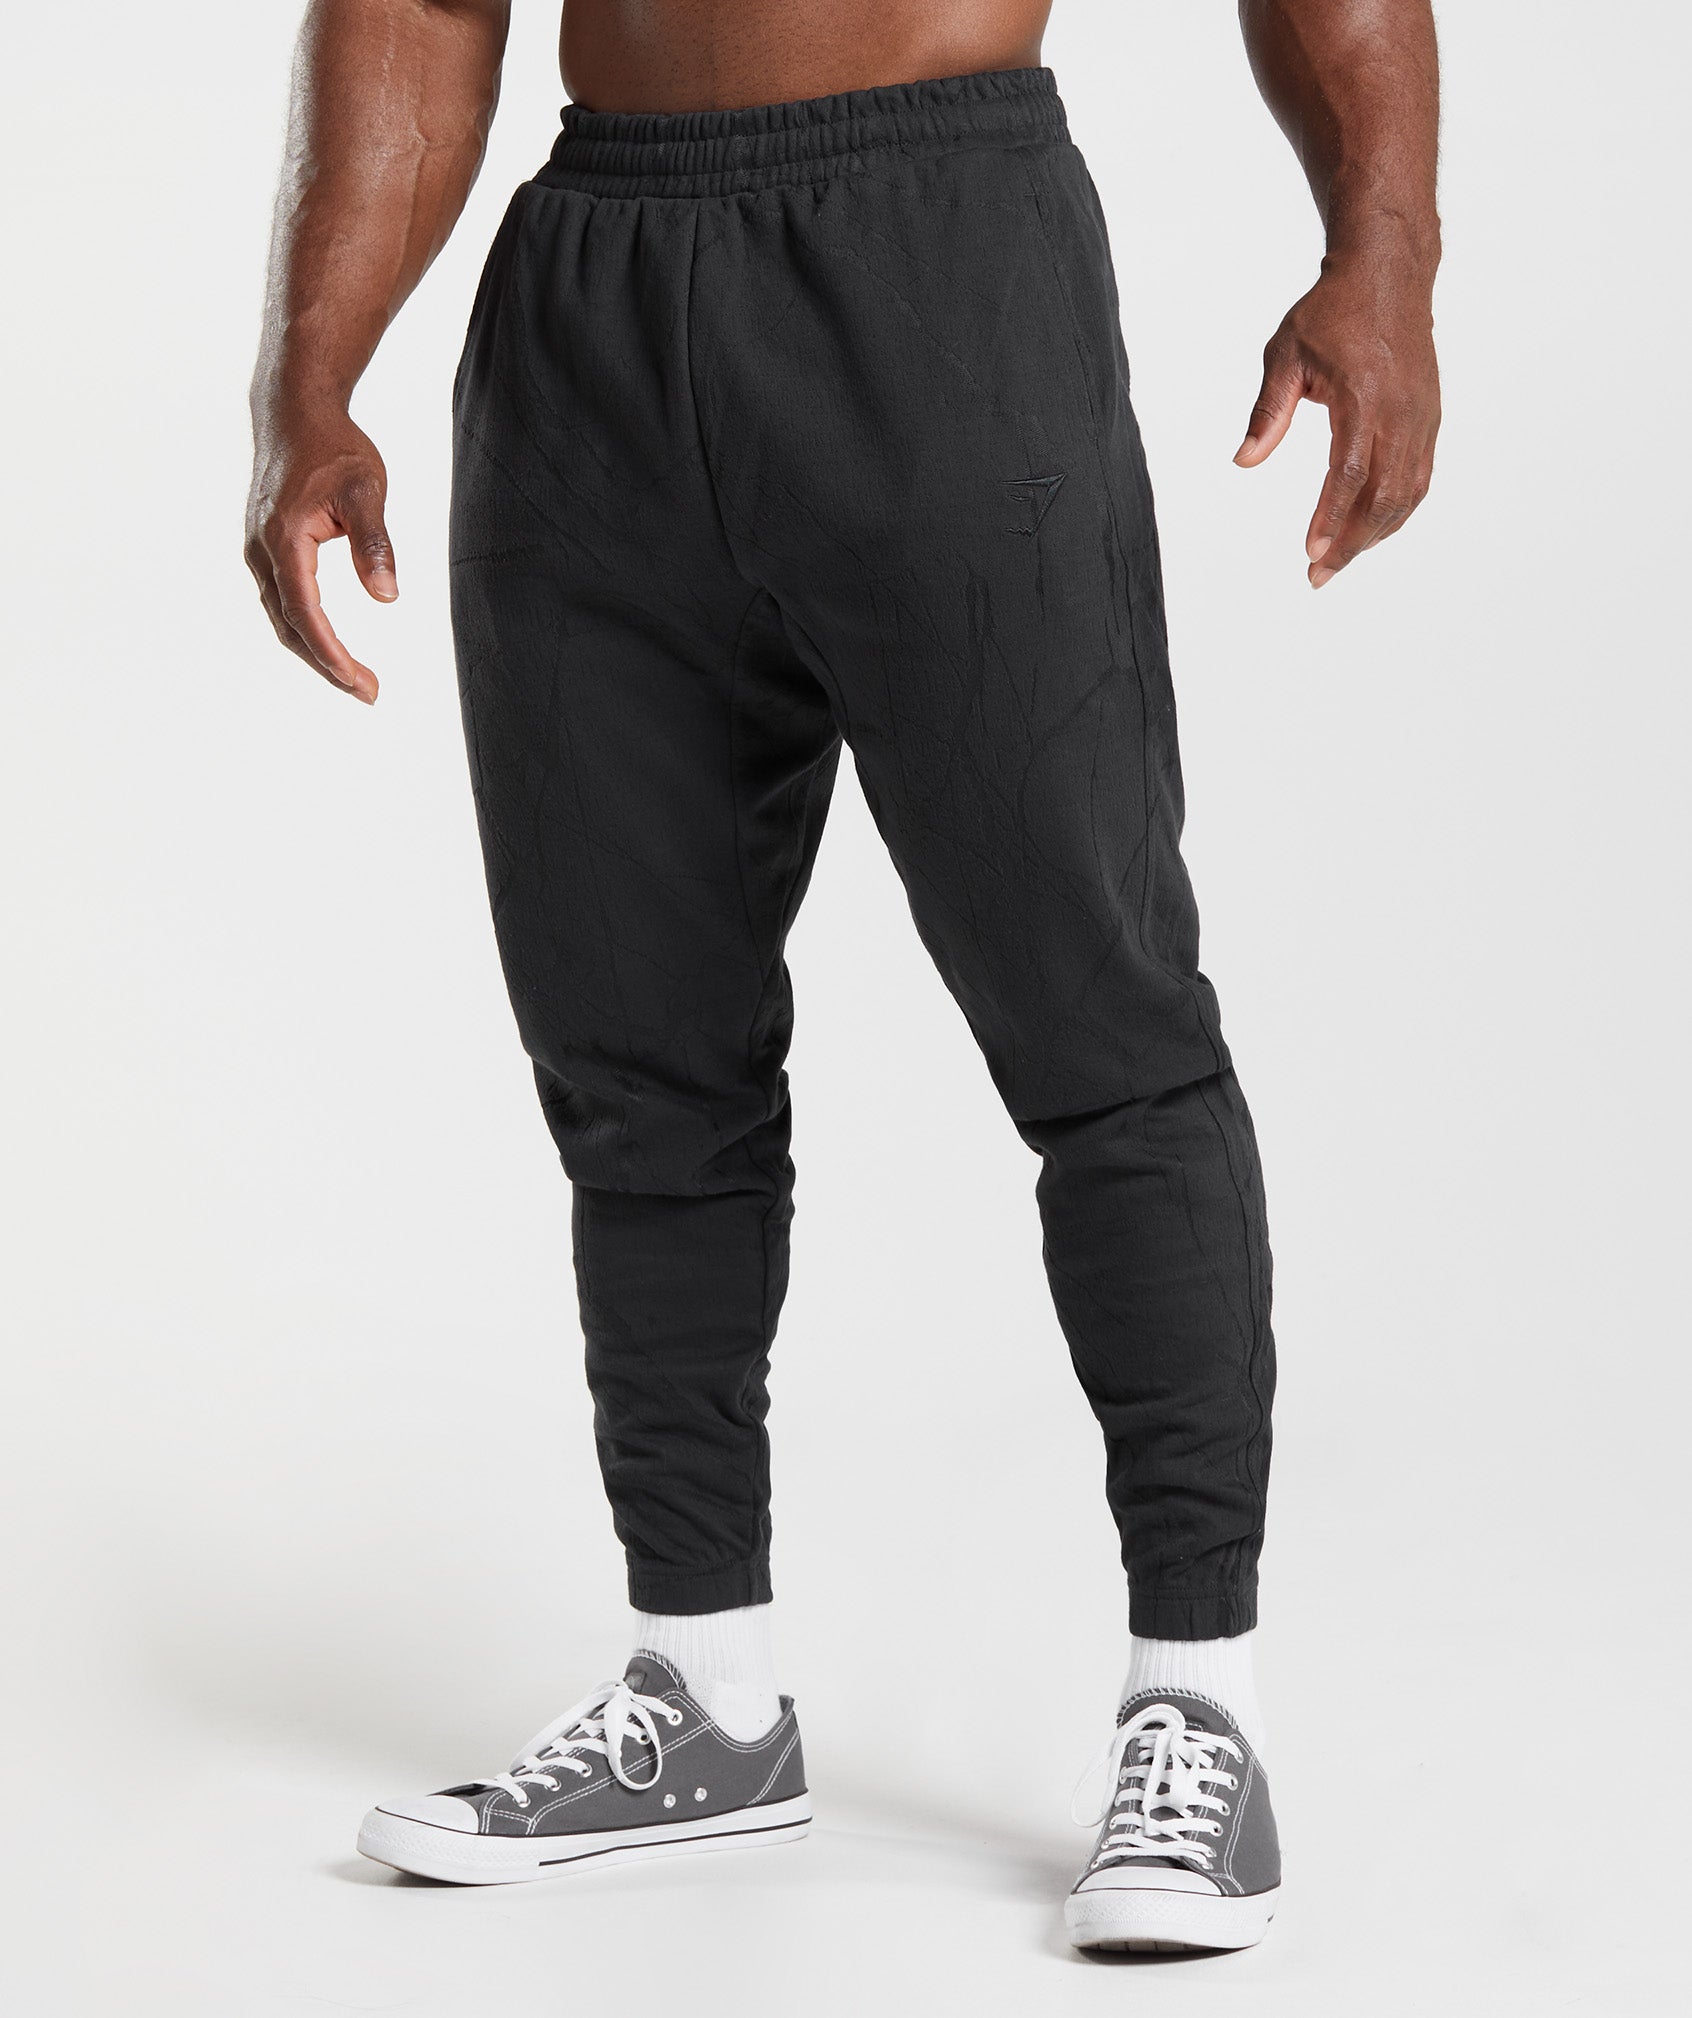 Gymshark Men's Critical zip black jogger sweatpants size Small